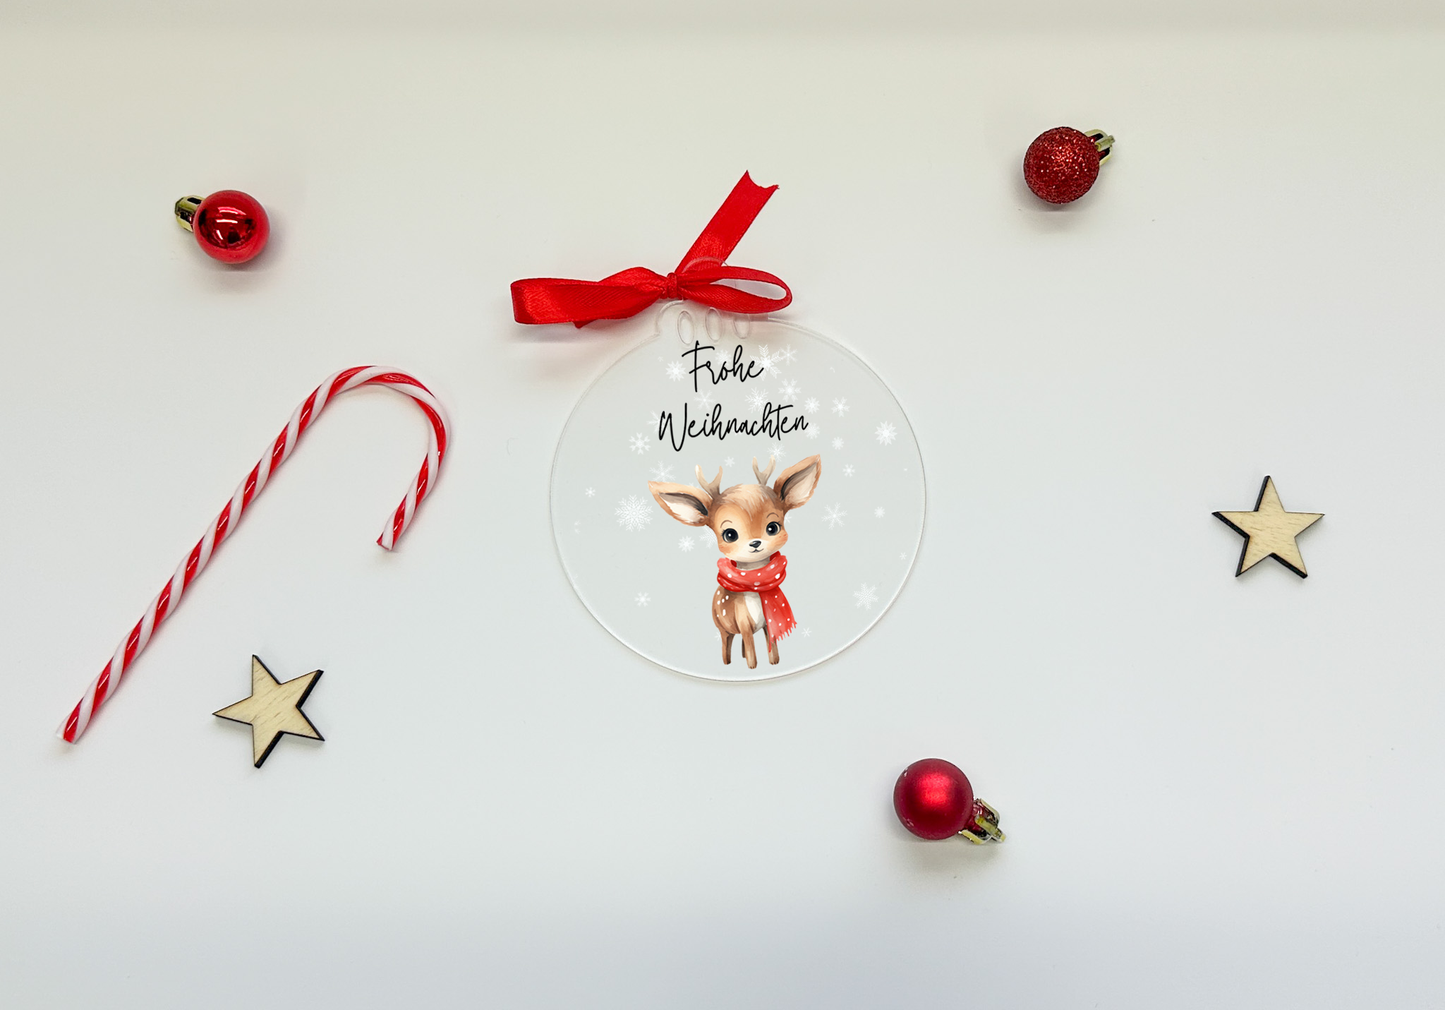 Boules de sapin de Noël en acrylique/personnalisées/Boules de sapin de Noël/Boules de Noël personnalisées